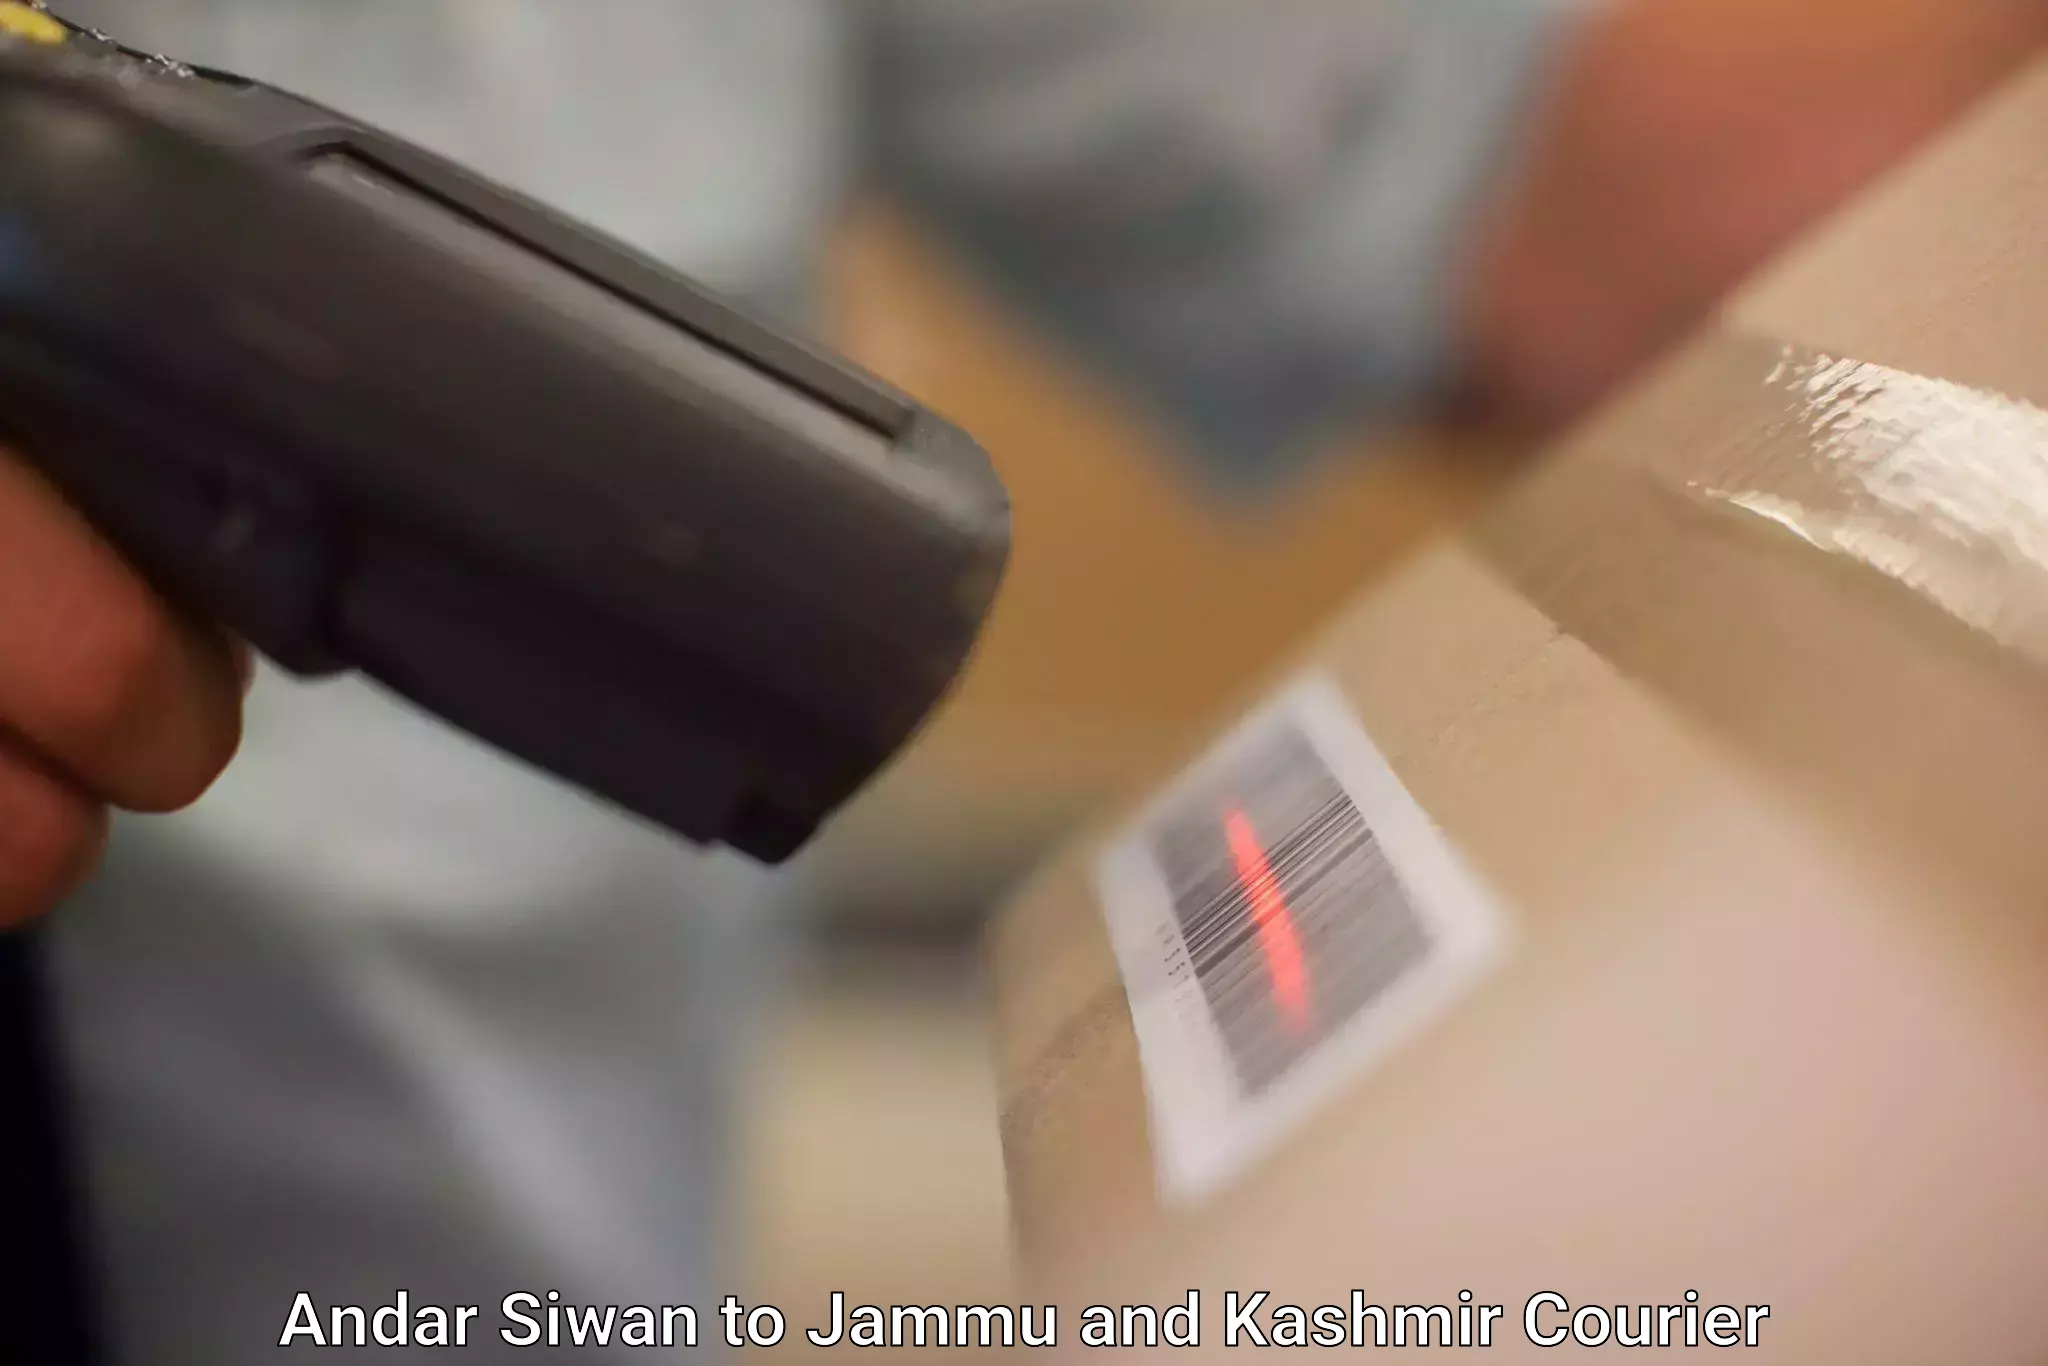 Package tracking Andar Siwan to Srinagar Kashmir